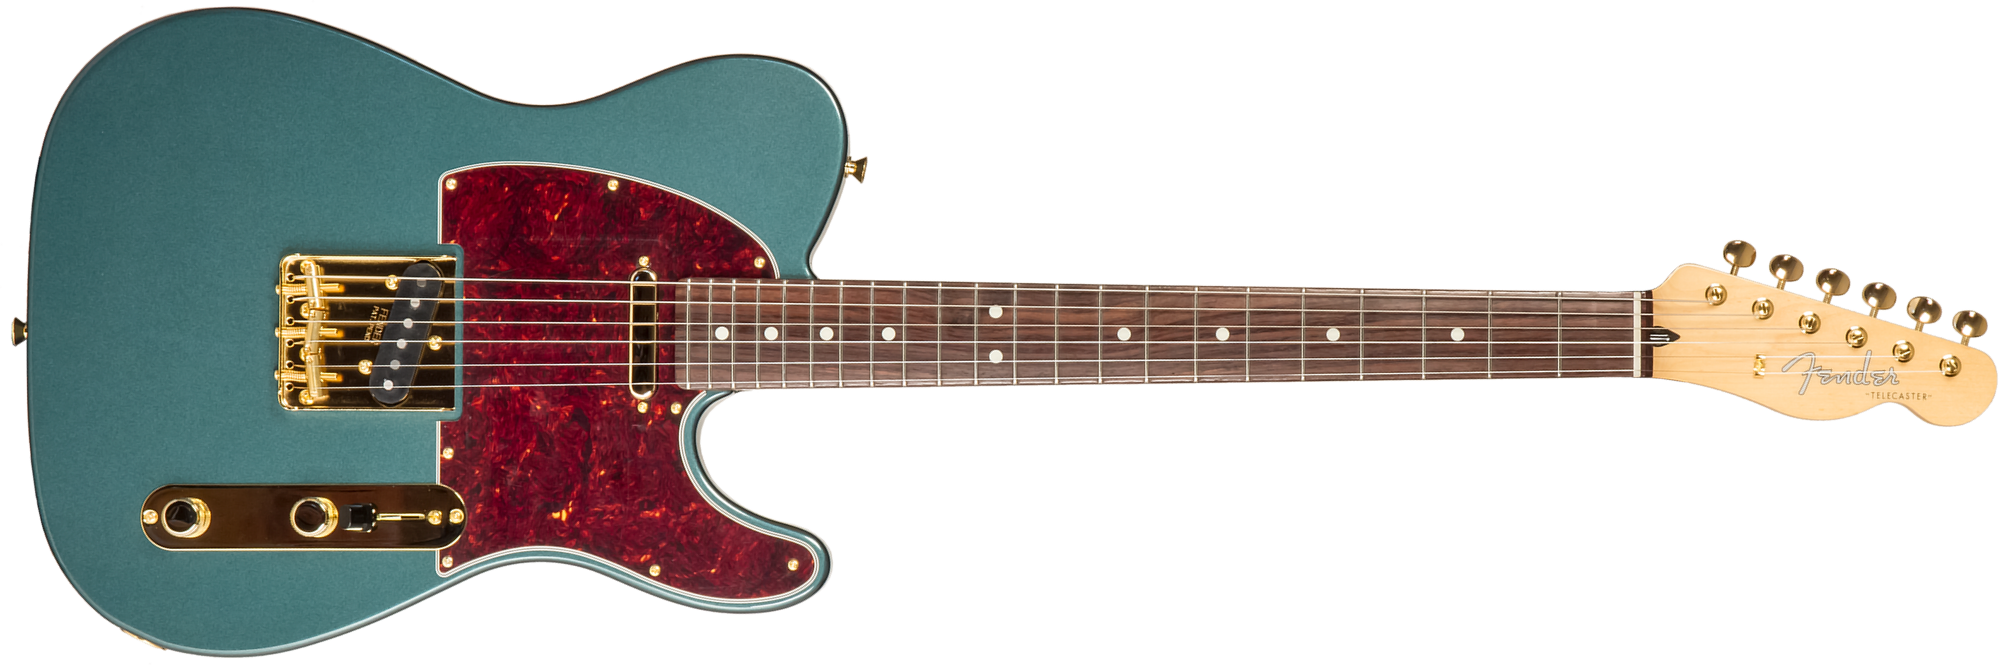 Fender Tele Hybrid Ii Jap 2s Ht Rw - Sherwood Green Metallic - Tel shape electric guitar - Main picture